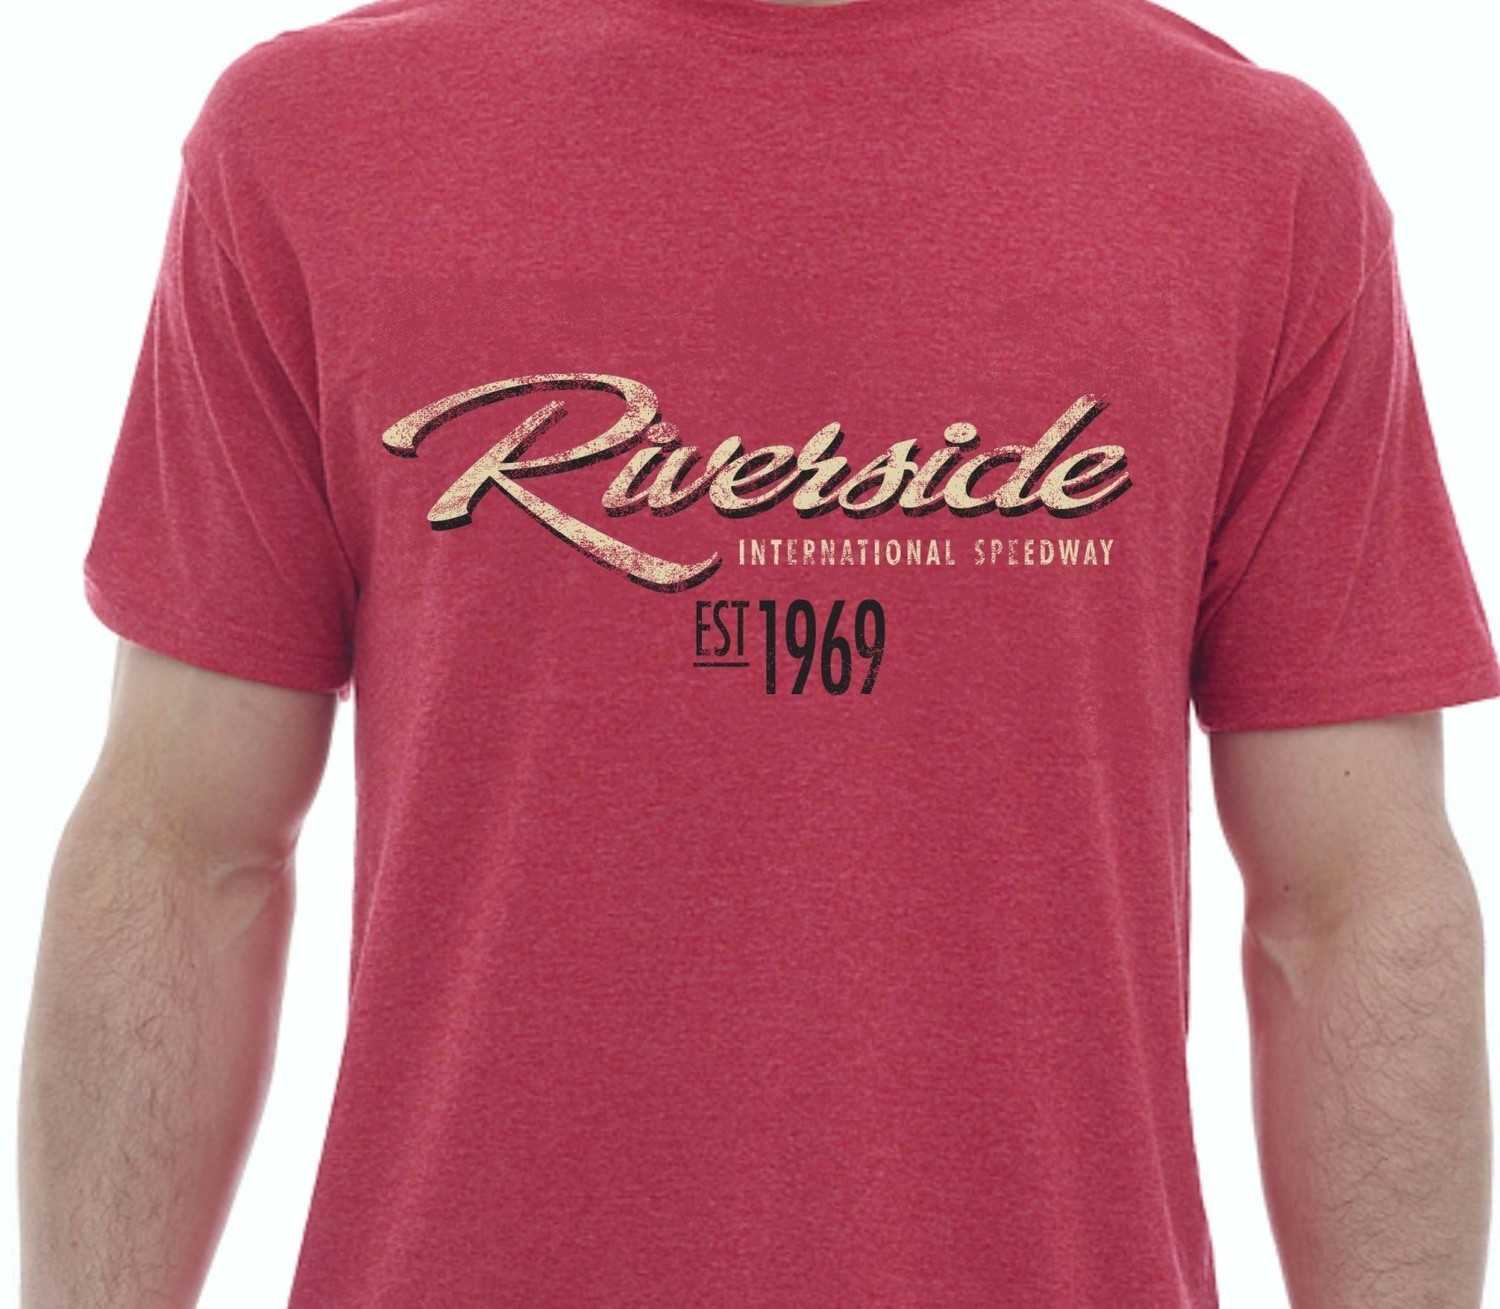 RIS Est. 1969 T-Shirt - Size Medium